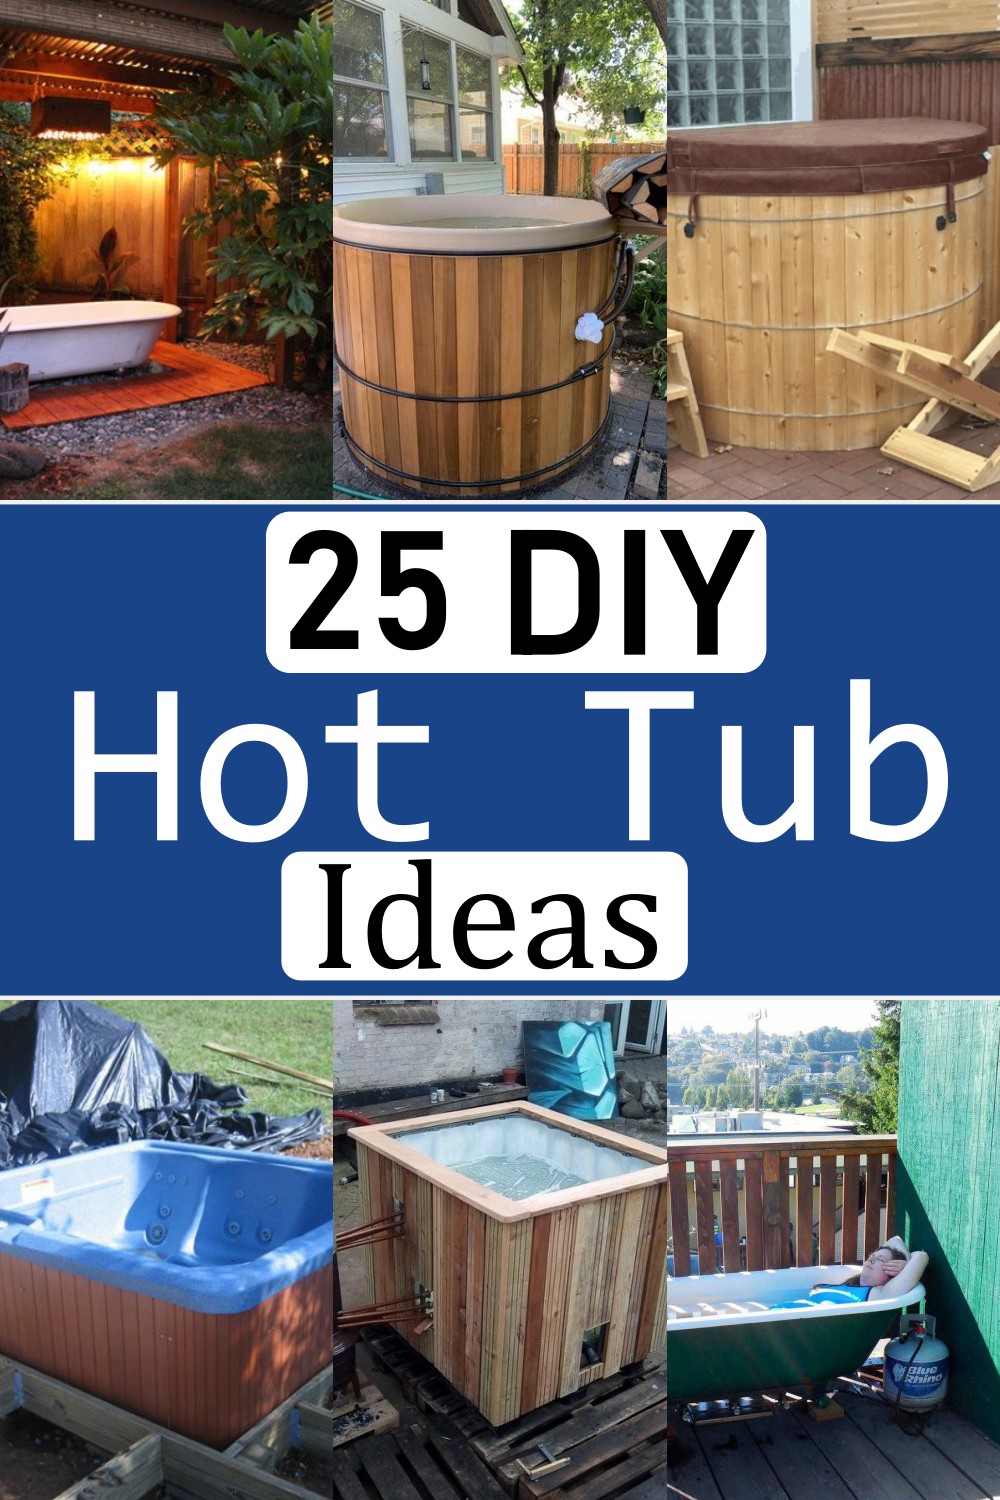 25 DIY Hot Tub Plans